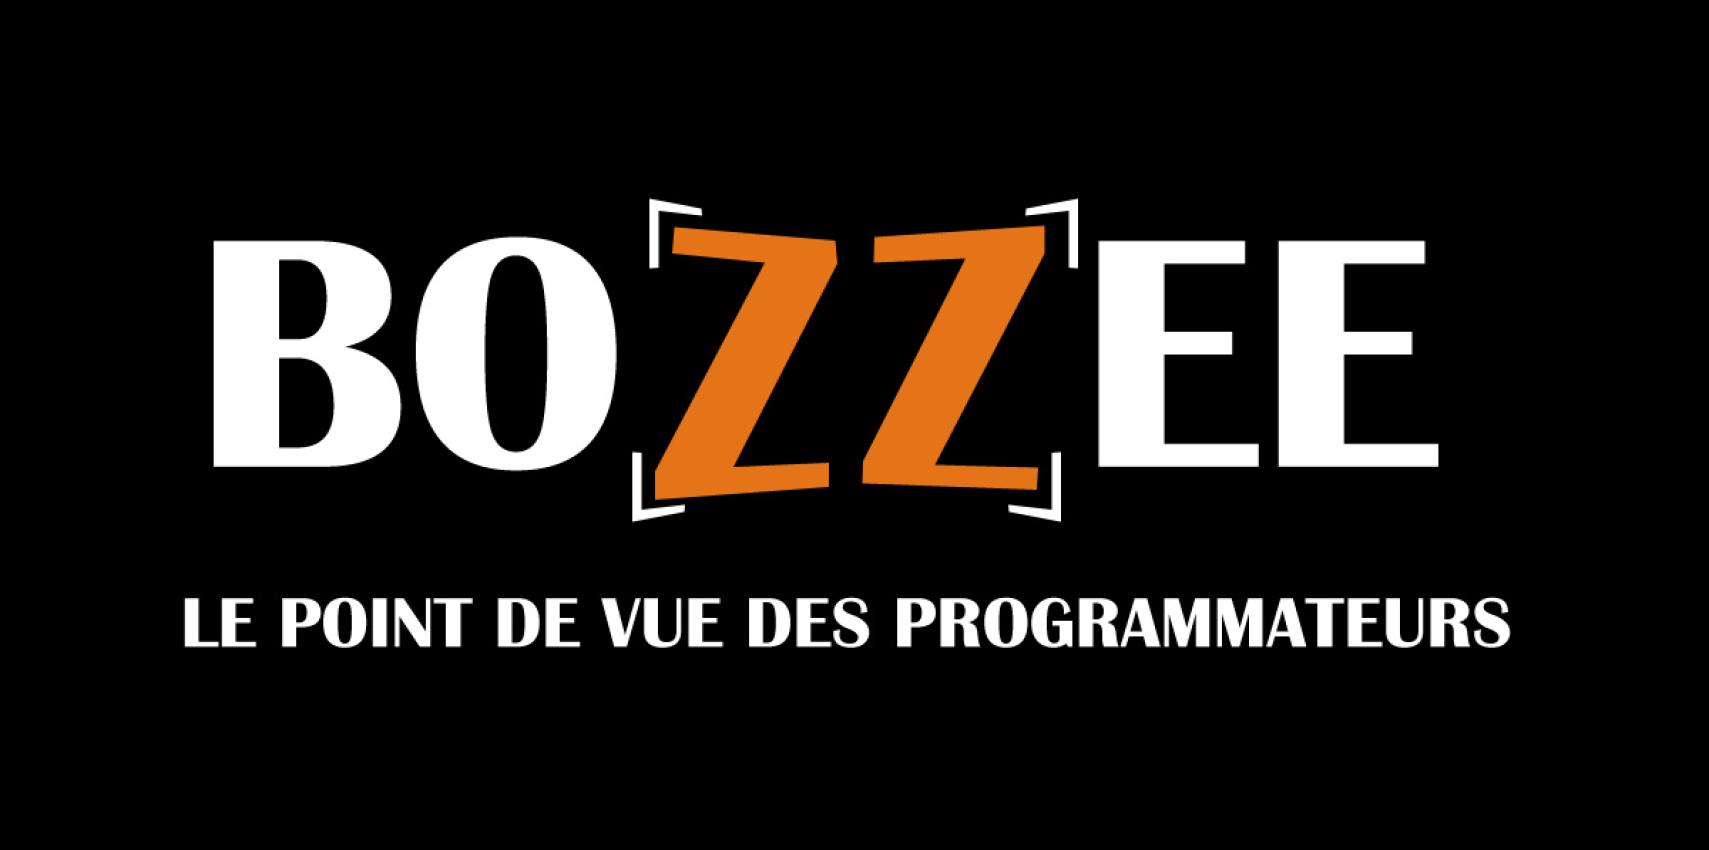 Création du logo BOZZEE